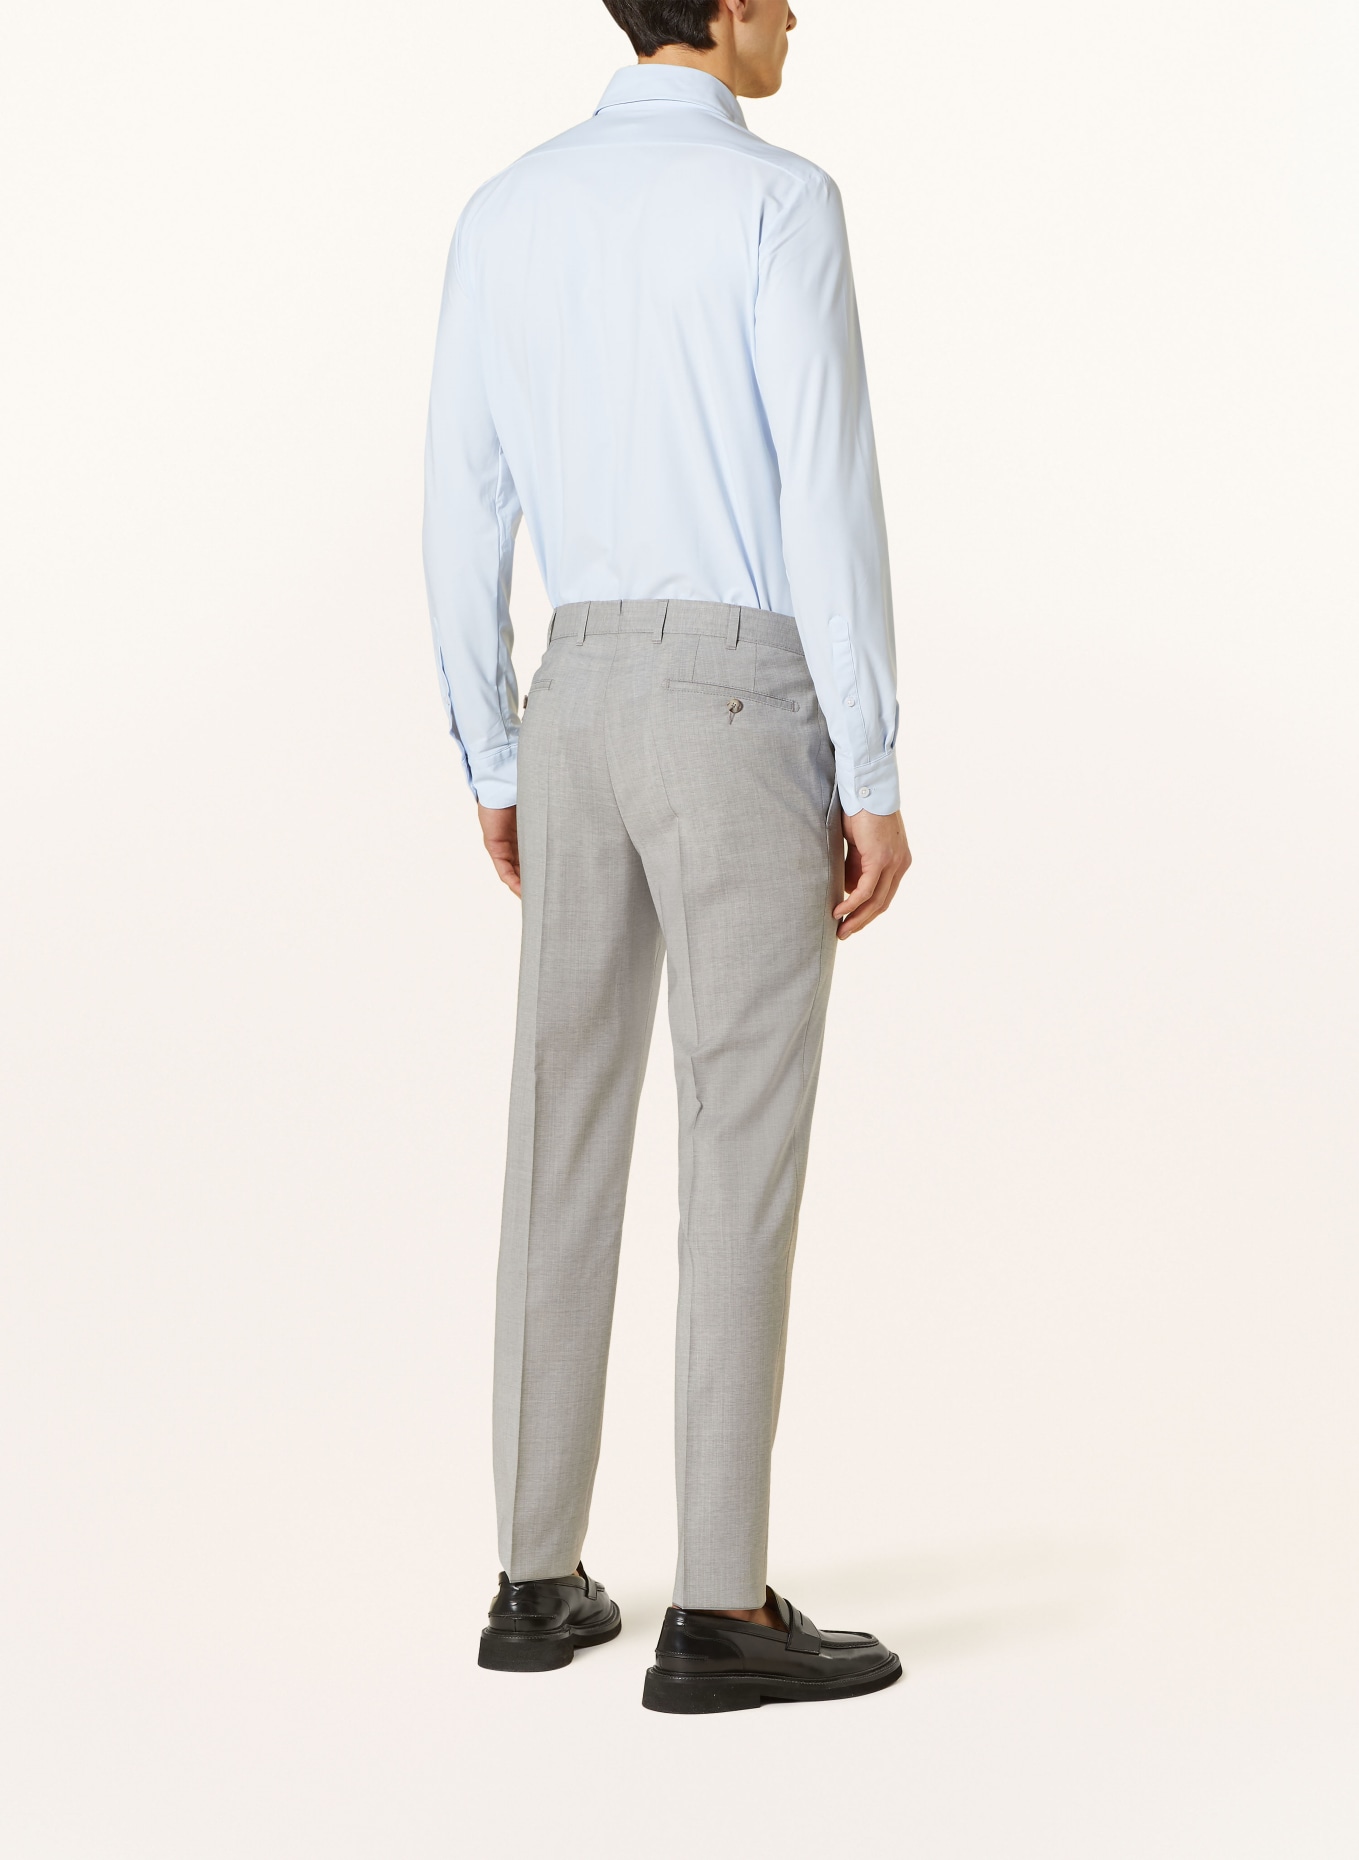 EDUARD DRESSLER Anzughose Shaped Fit, Farbe: 013 HELLGRAU (Bild 4)